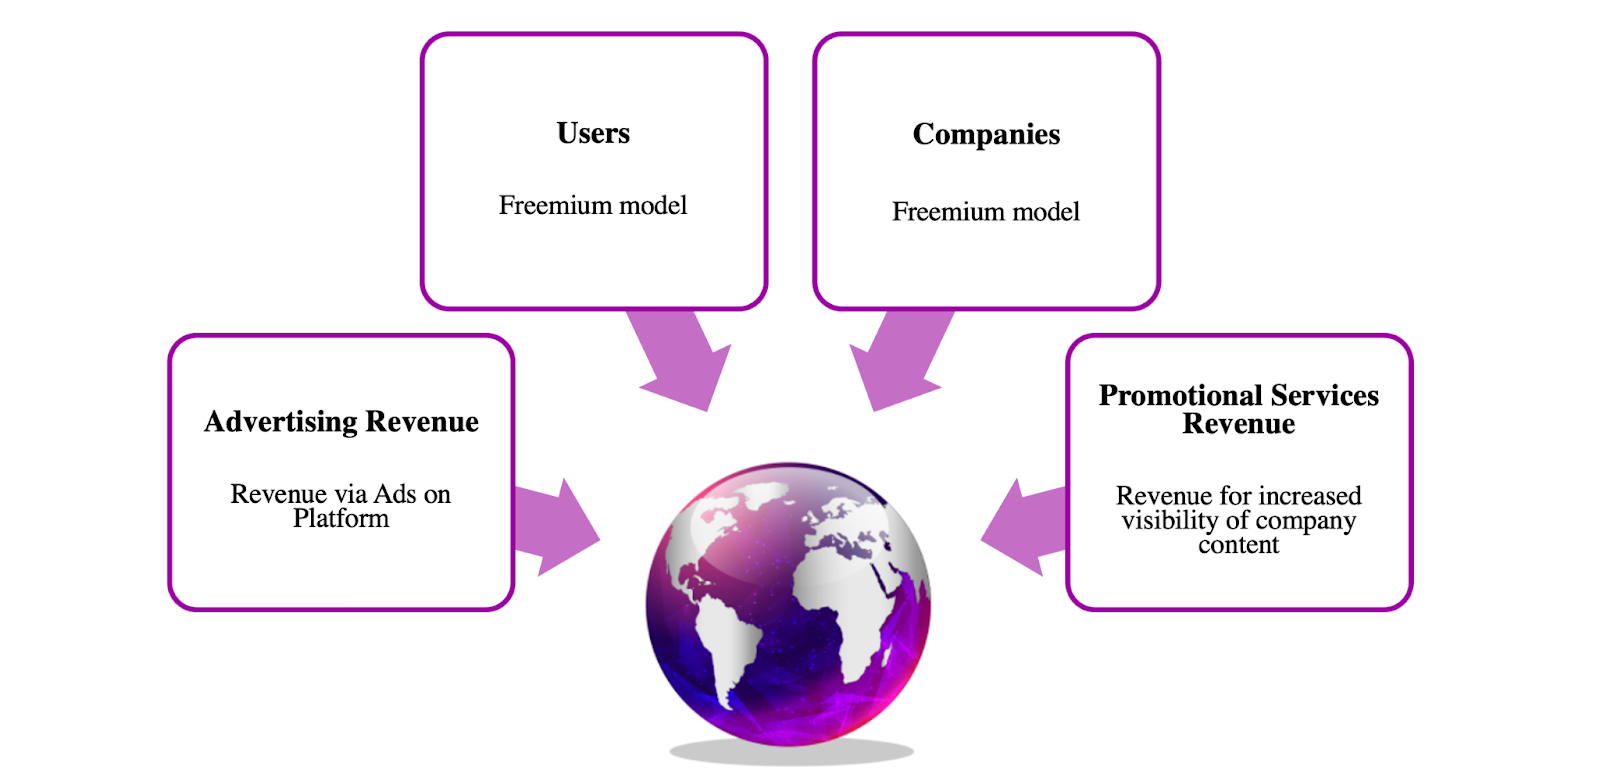 Business Model